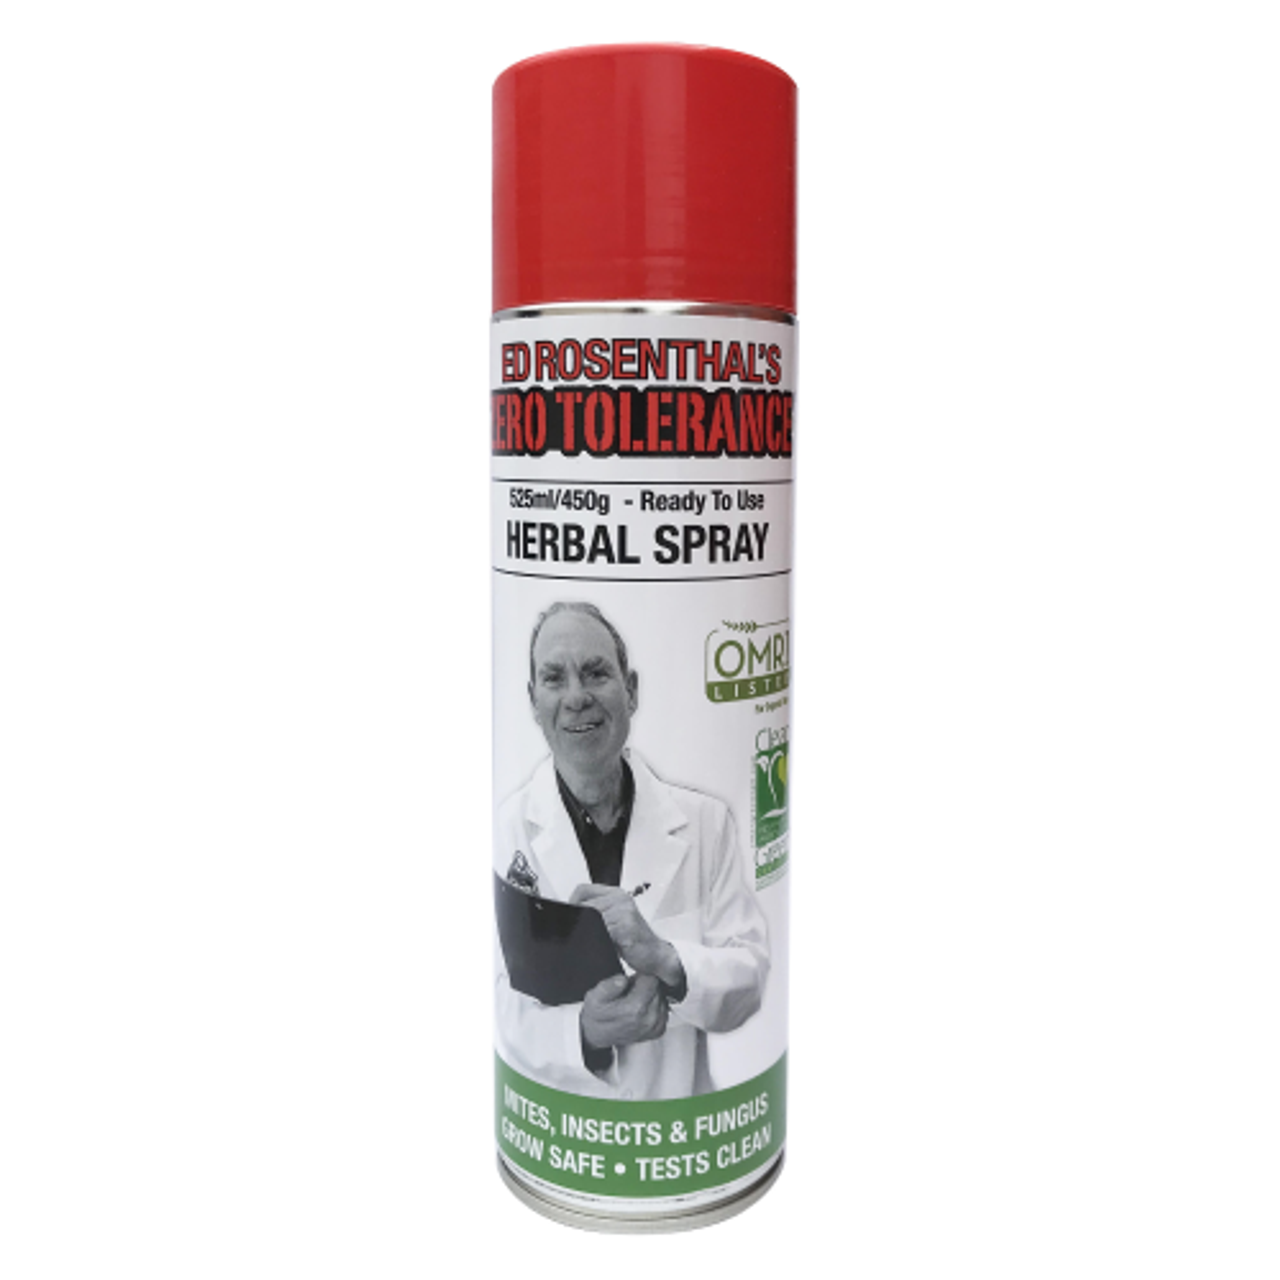 Ed Rosenthals Zero Tolerance Herbal spray Can